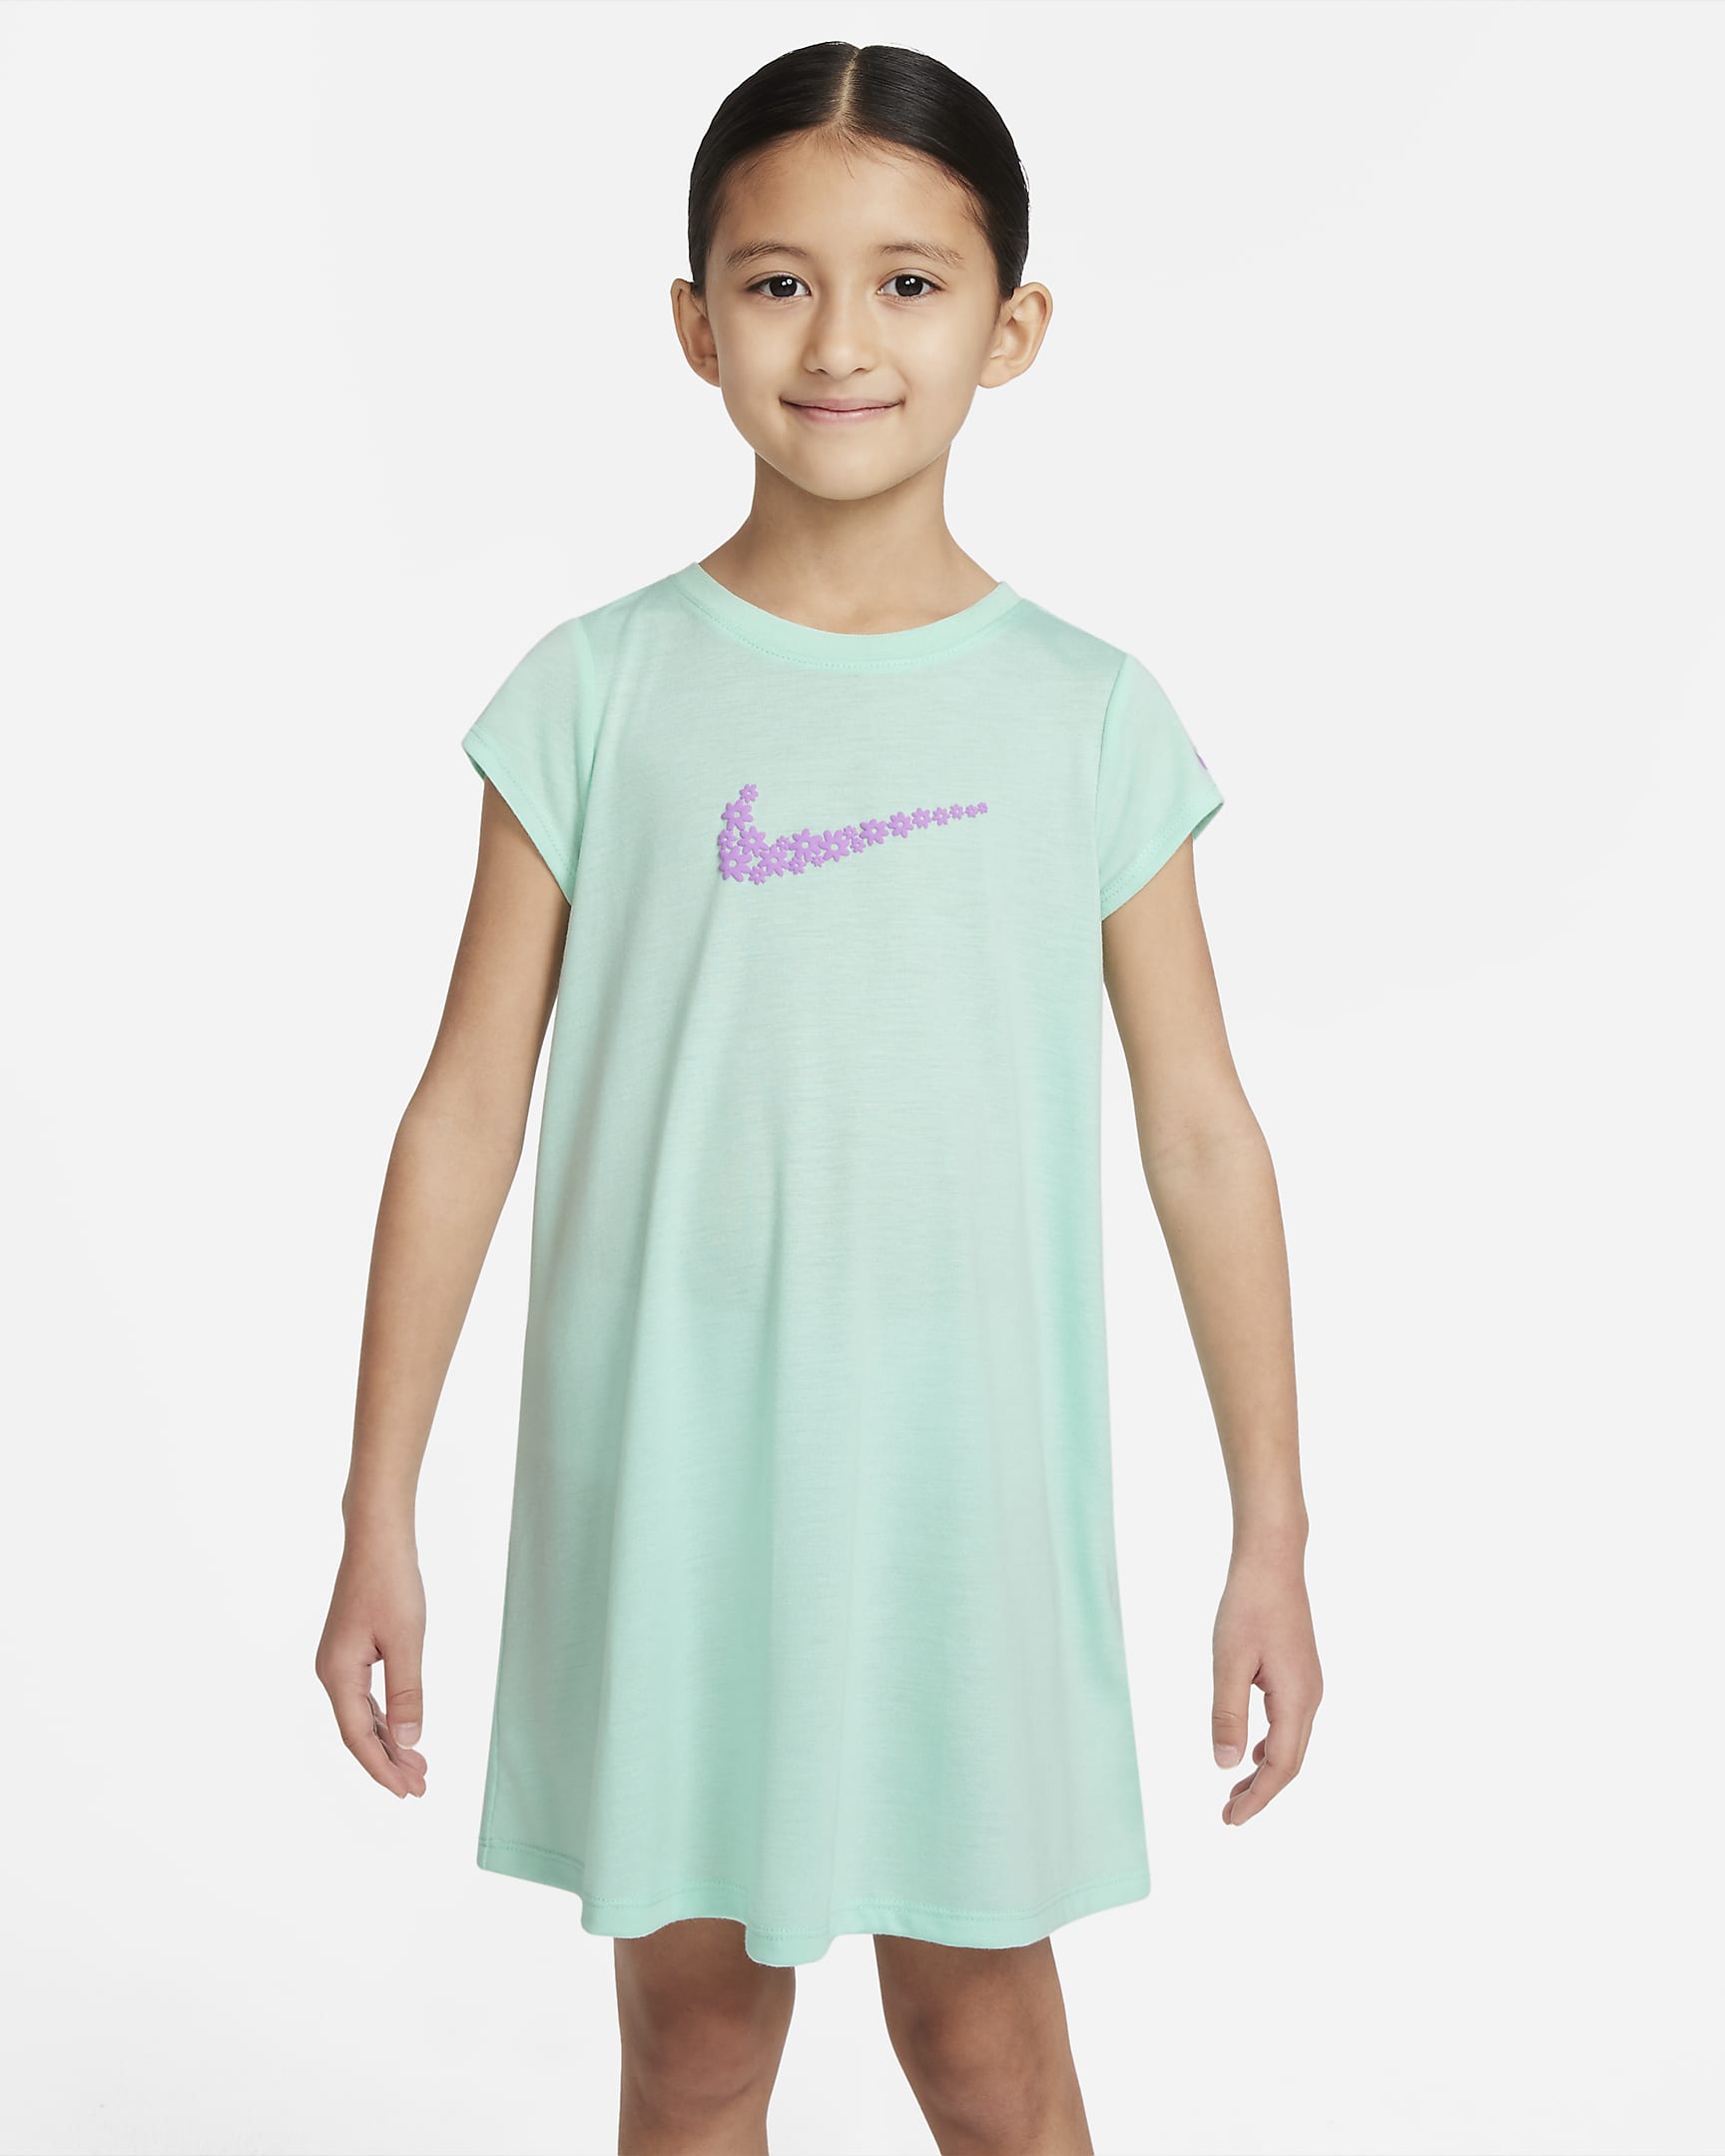 Nike Little Kids' Dress. Nike.com